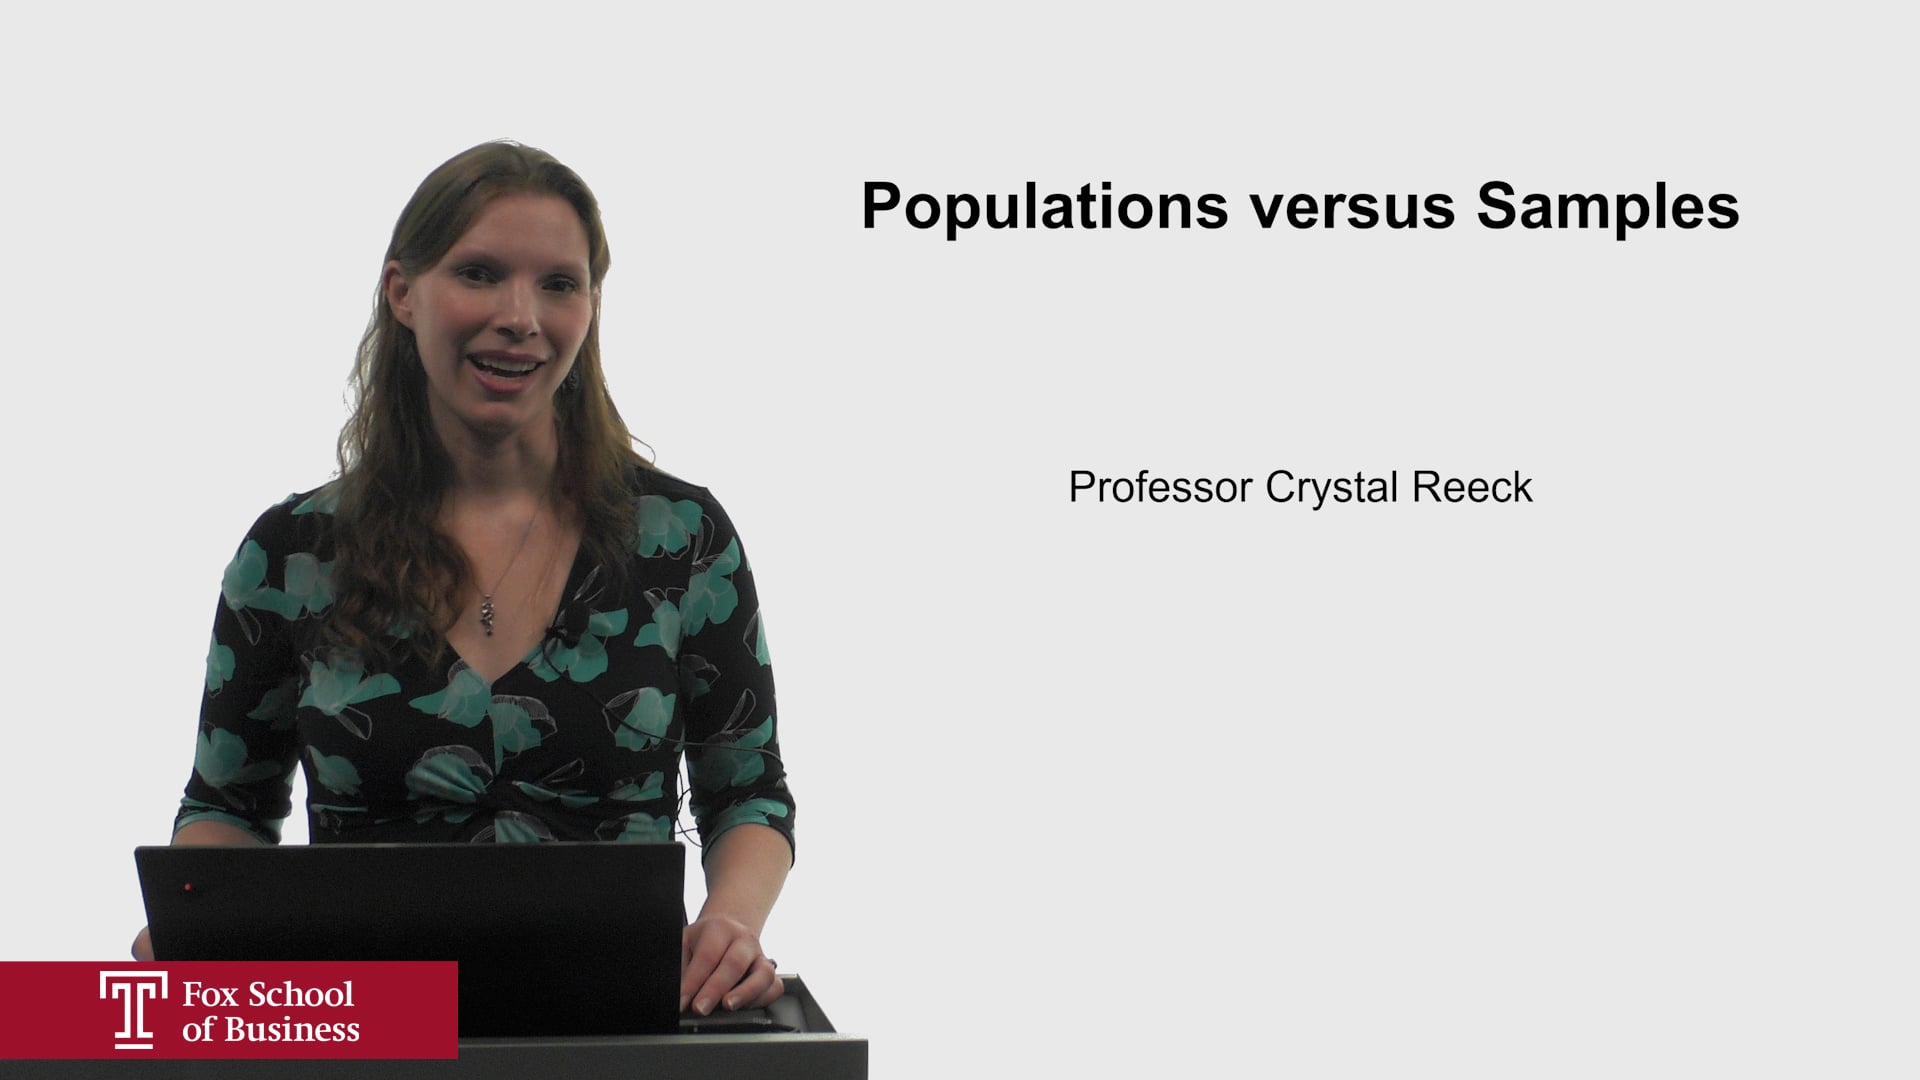 Population versus Samples